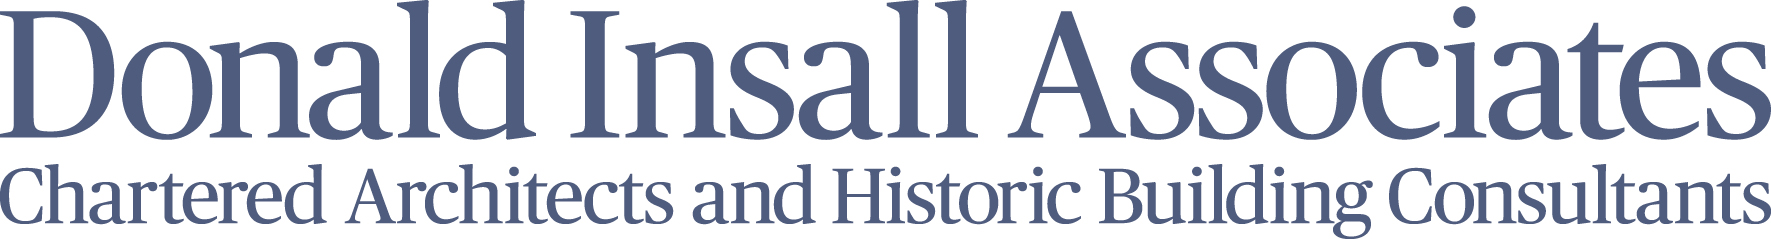 logo for DONALD INSALL ASSOCIATES LTD